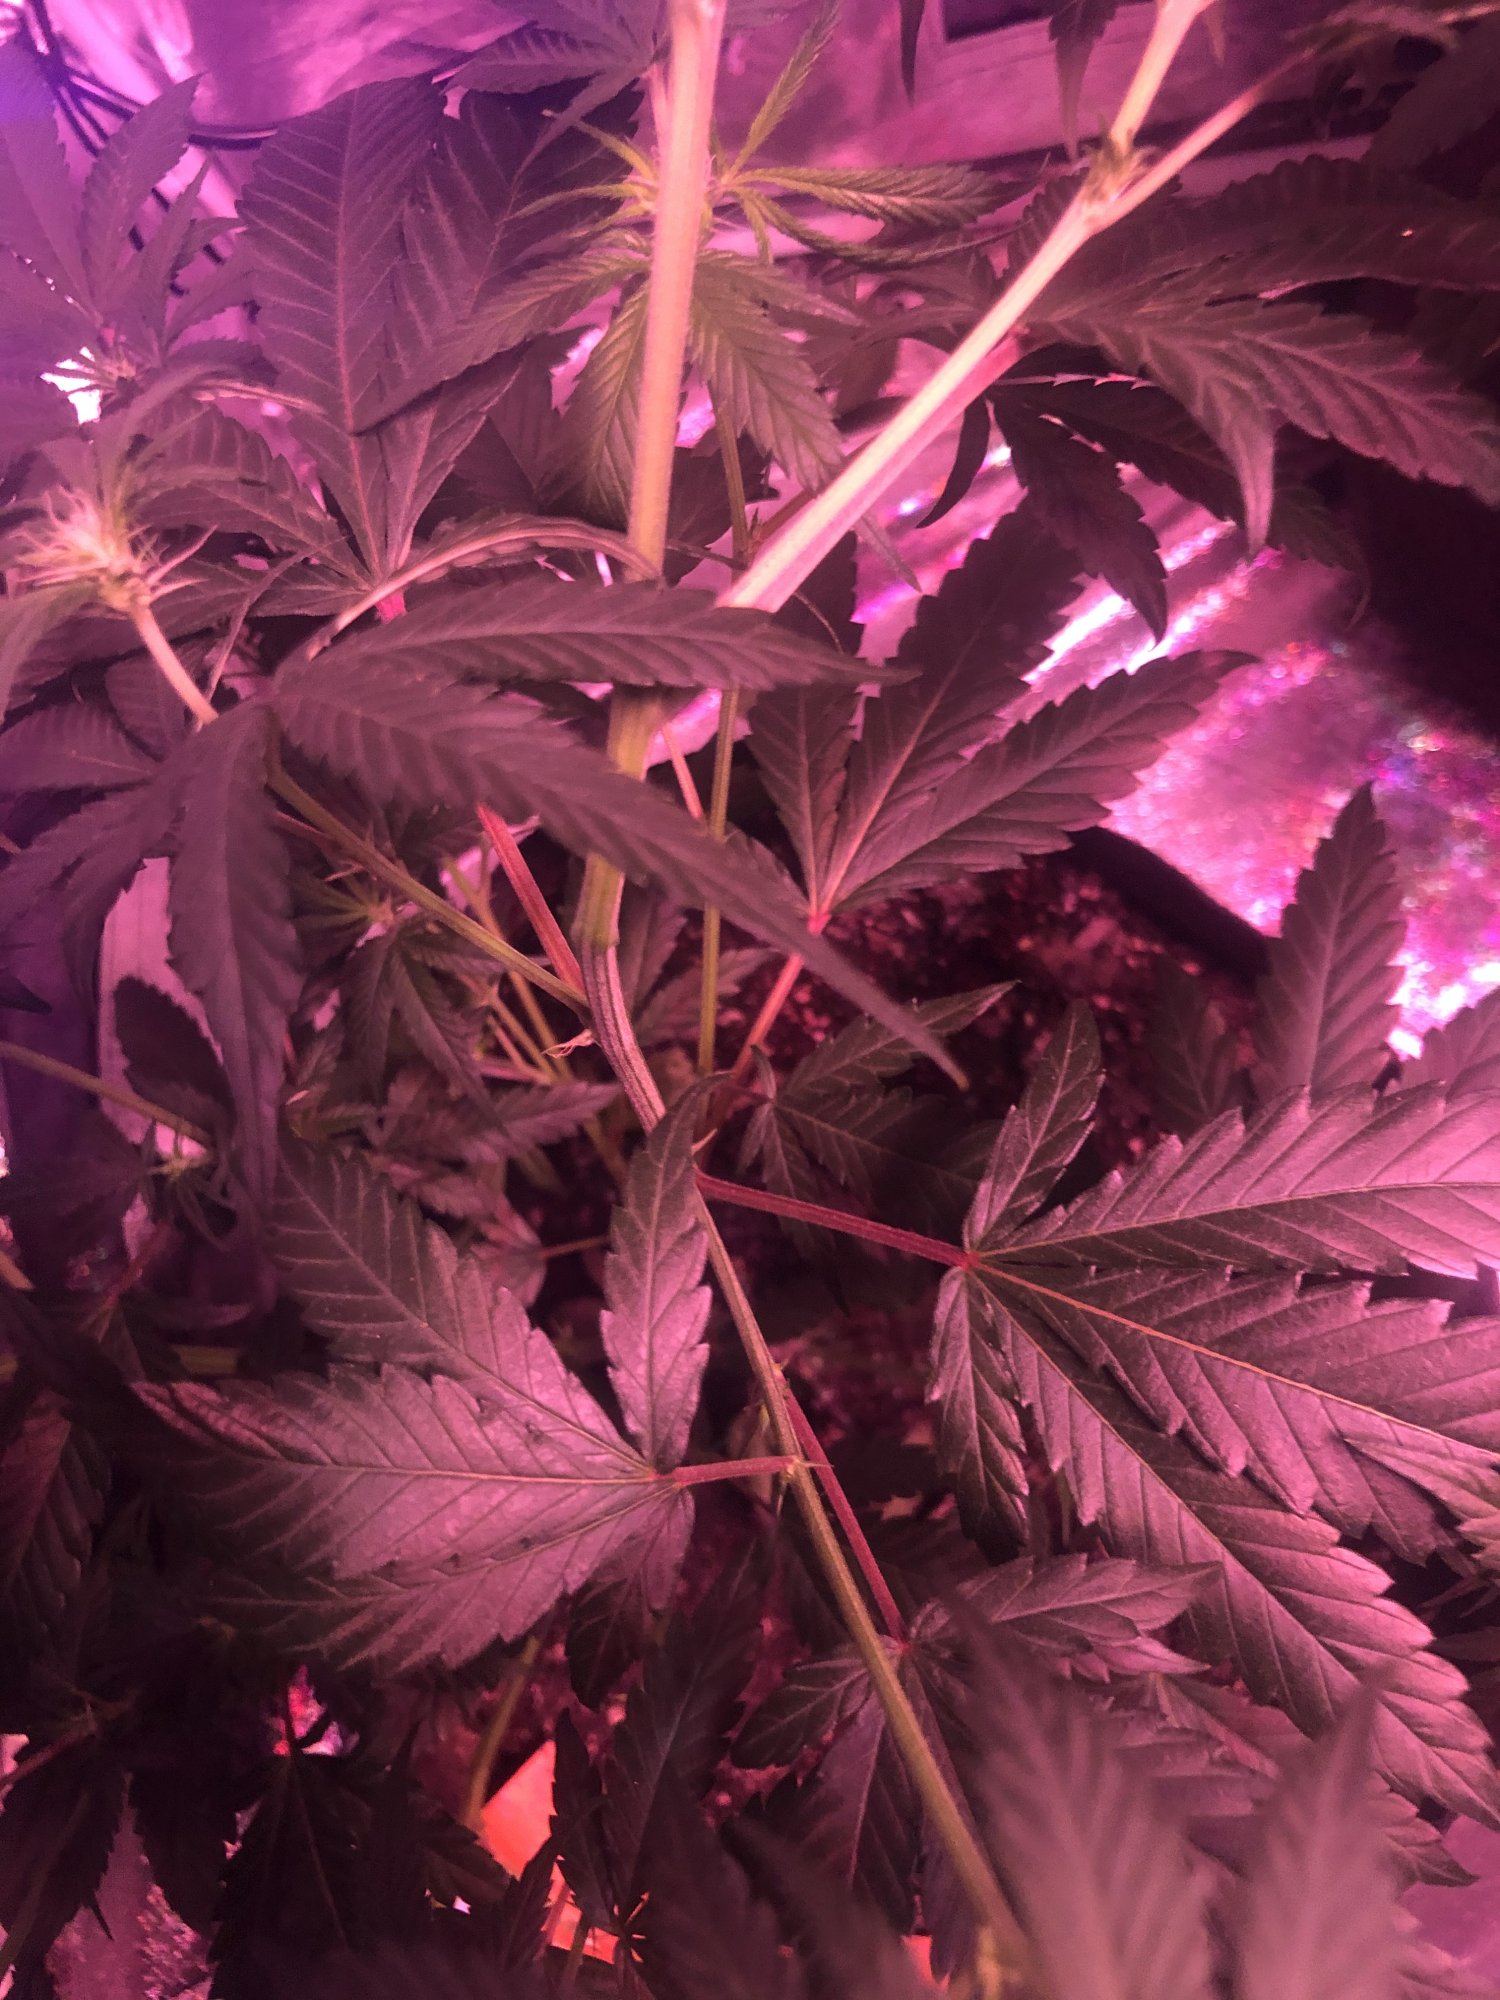 Plant help